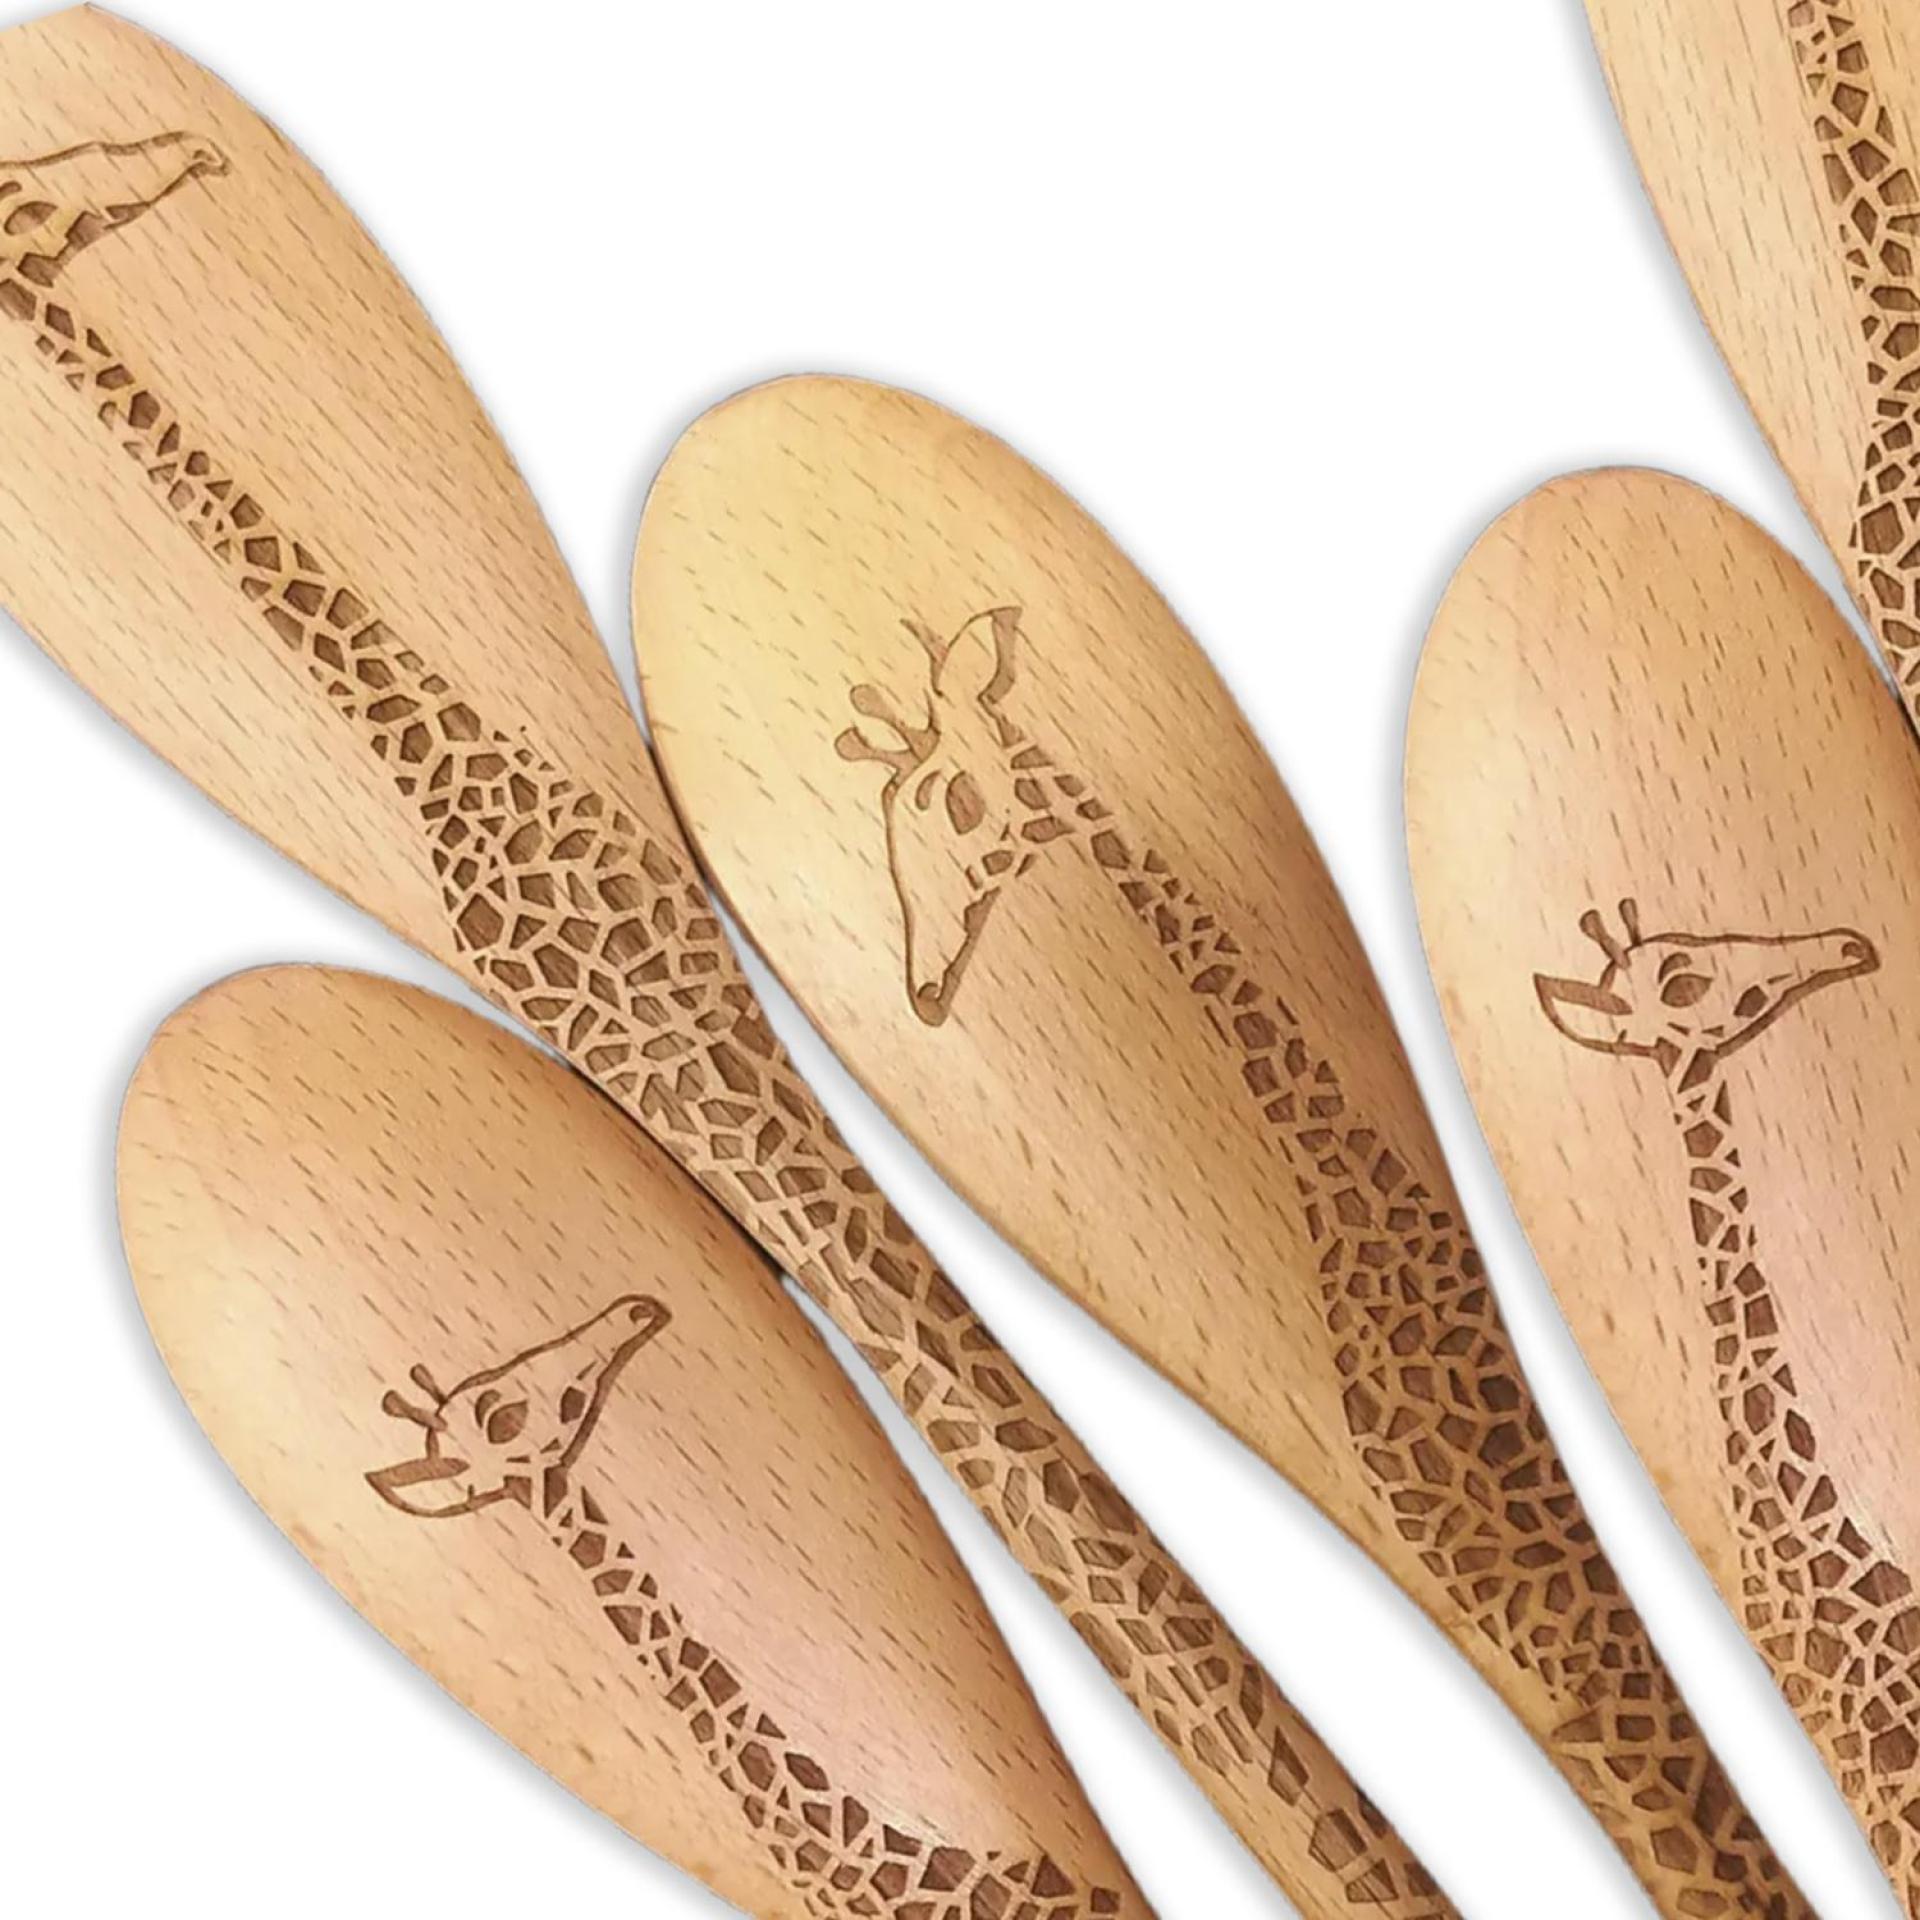 Engraved Wooden Spoons, Giraffes Spoons, Giraffes - Engraved Wooden Spoons